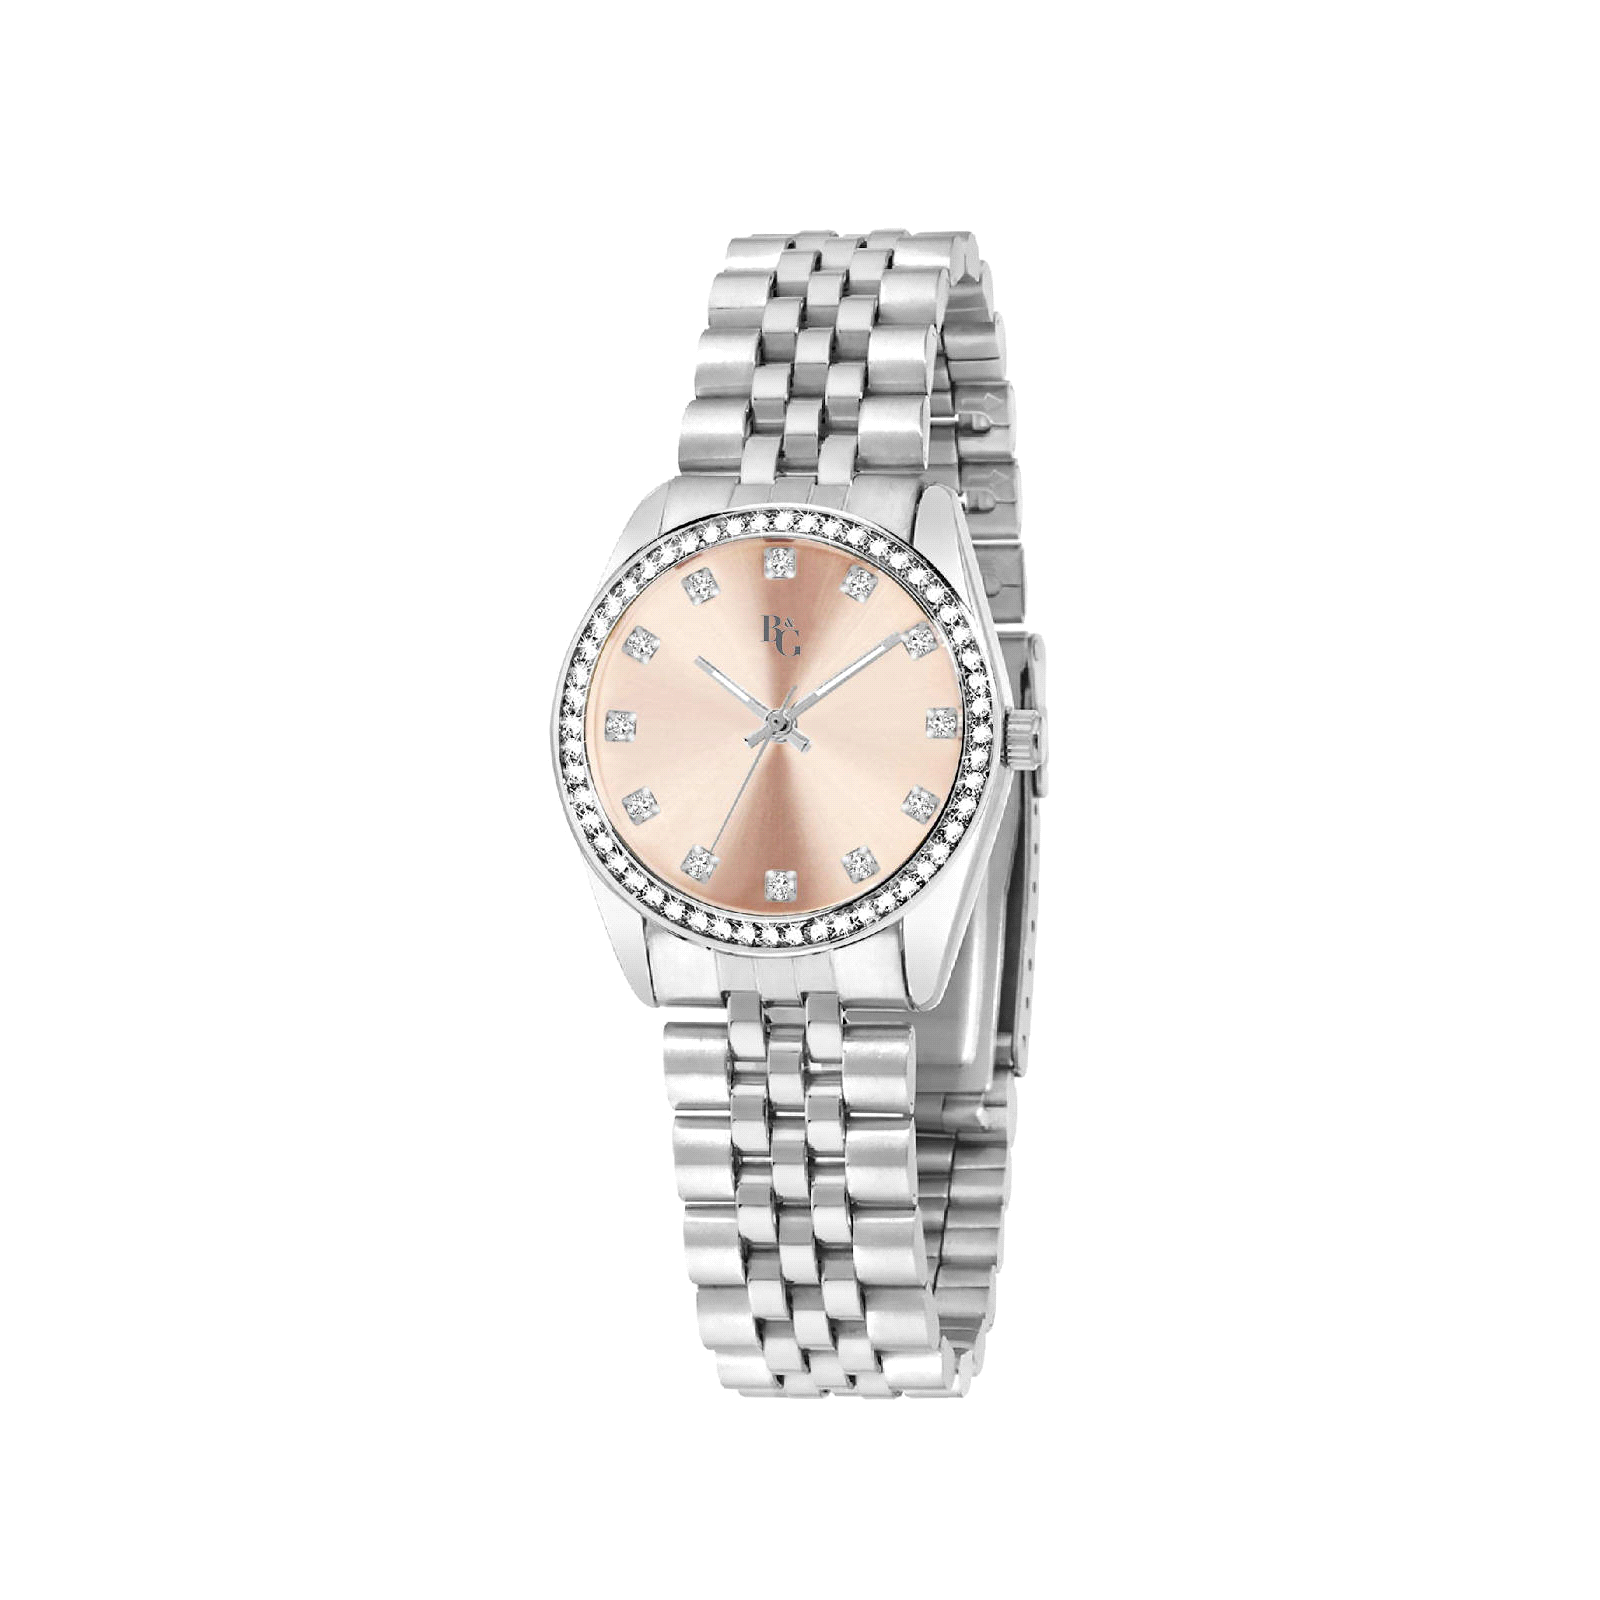 B&G LUXURY R3853241516 Γυναικείο Ρολόι Quartz Ακριβείας.jpg